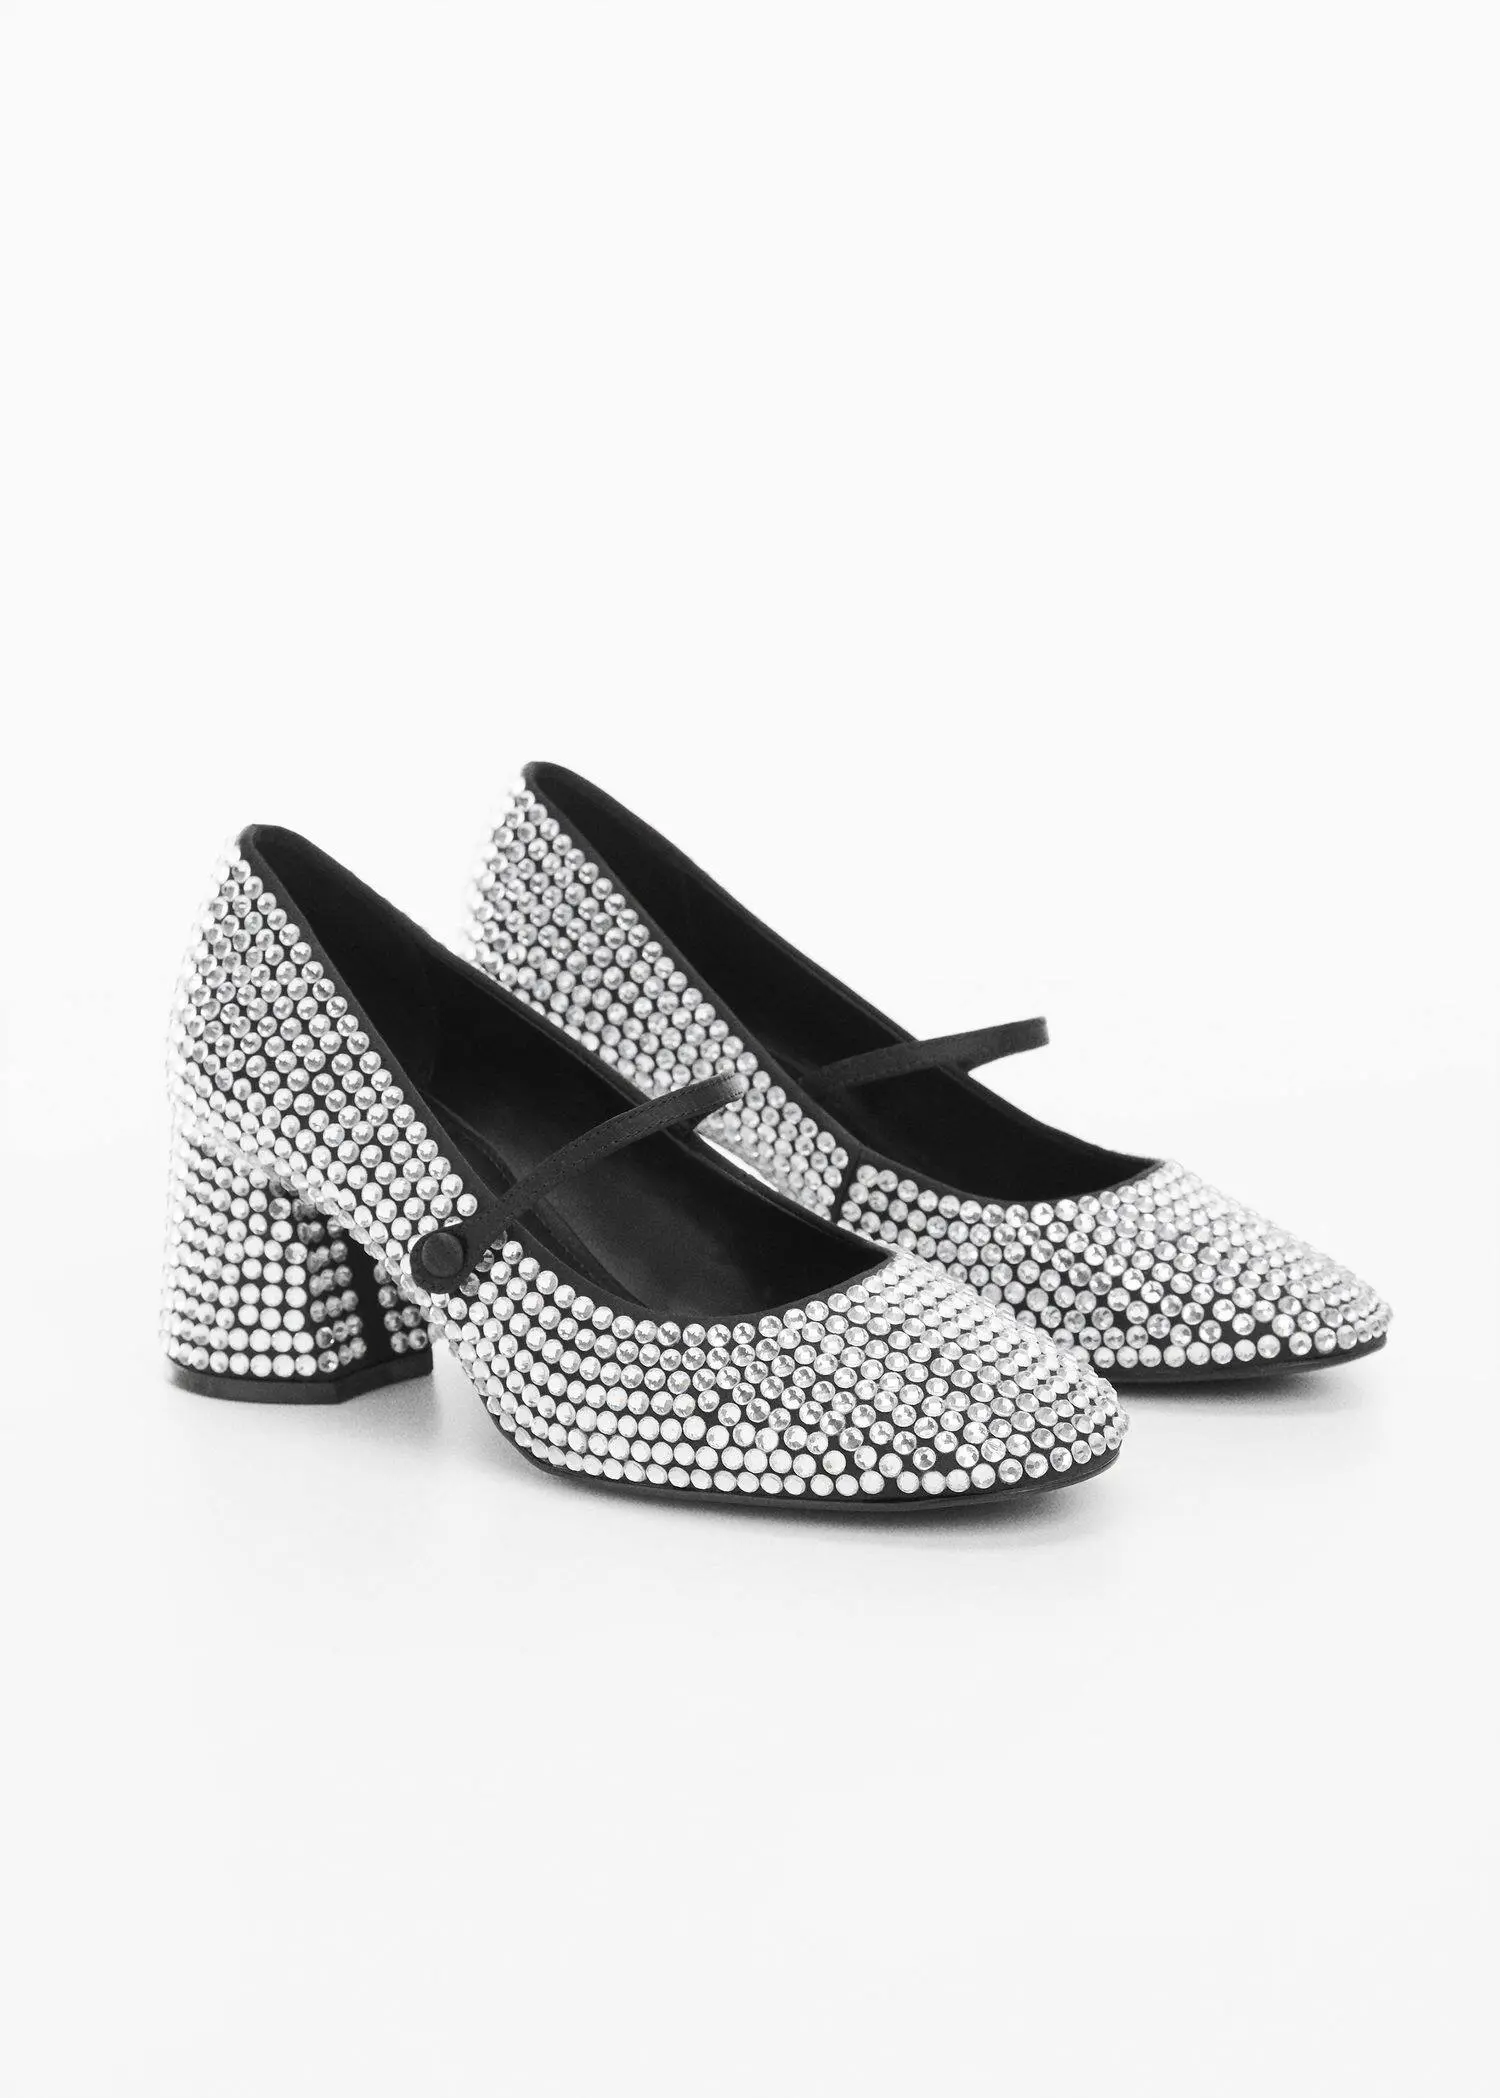 Mango Shoes with shiny heels. 3